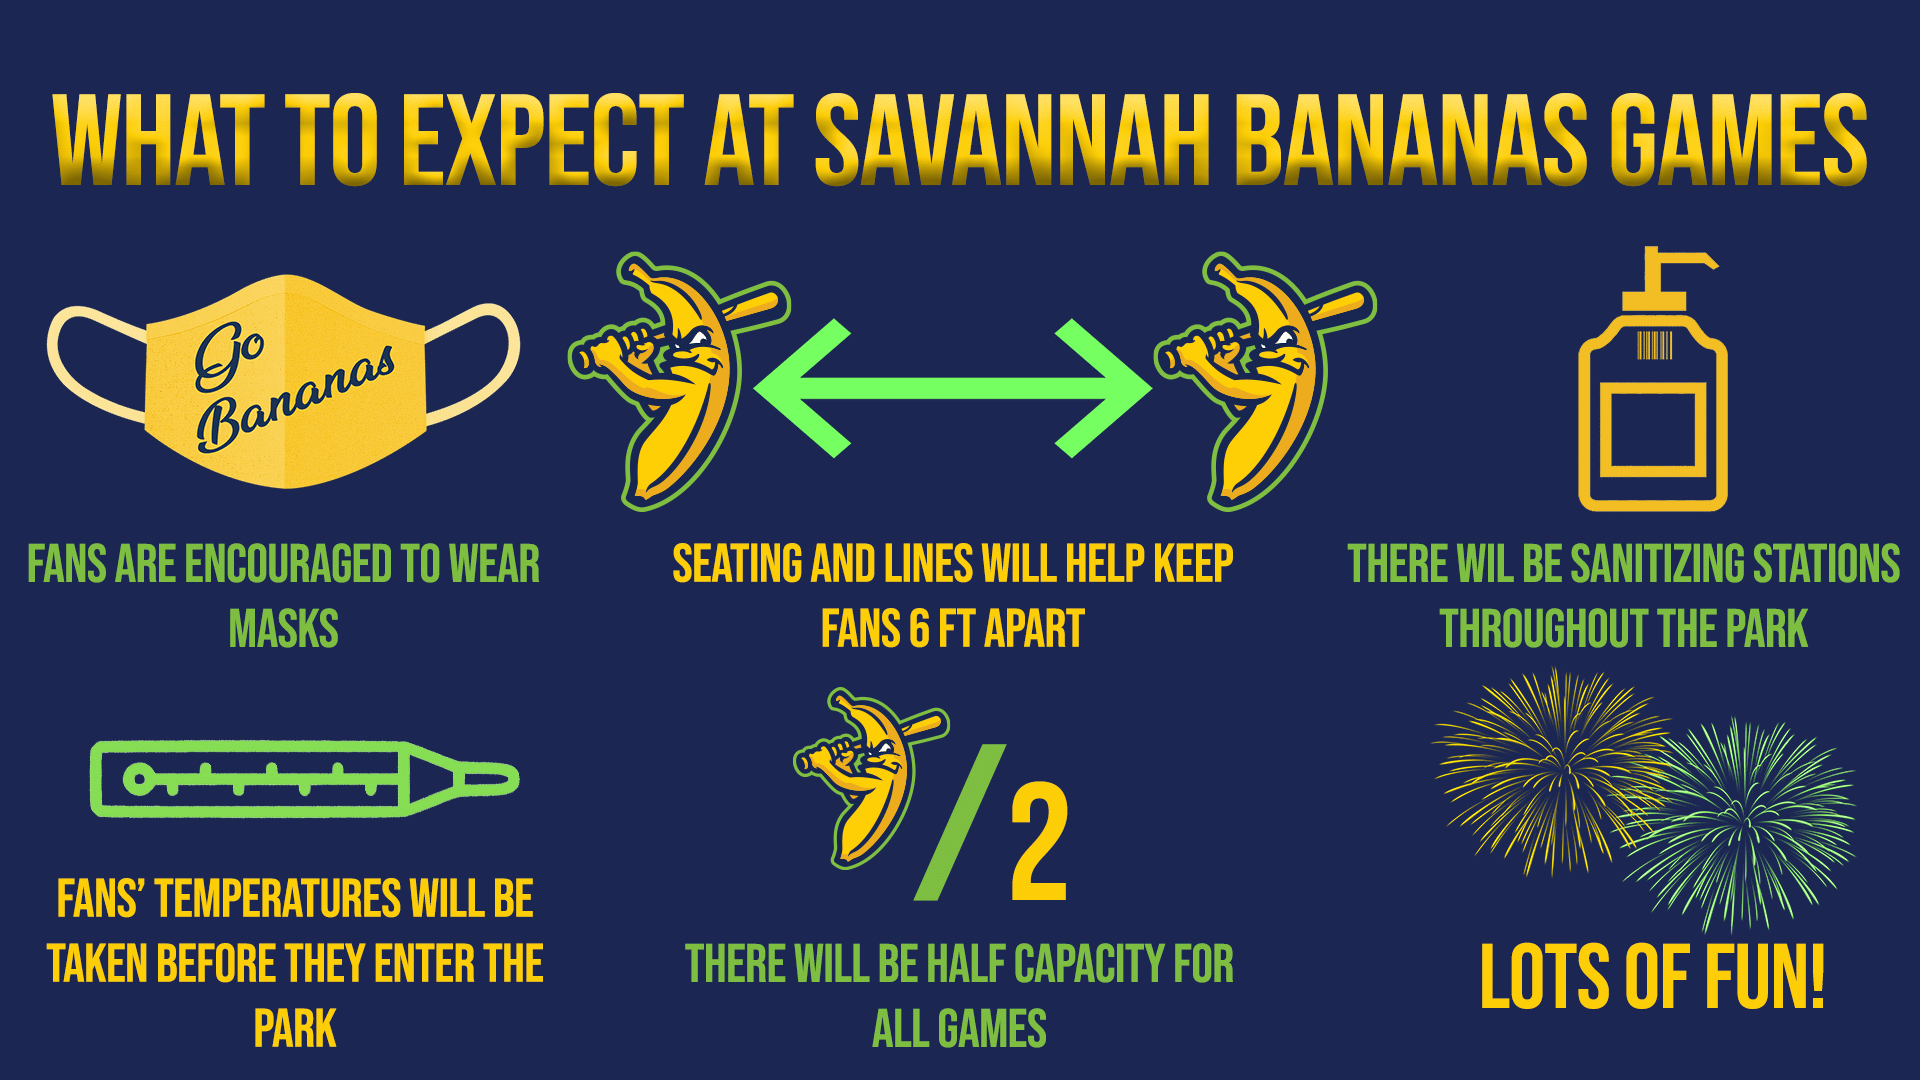 Bananas Reveal Health and Safety Details - The Savannah Bananas